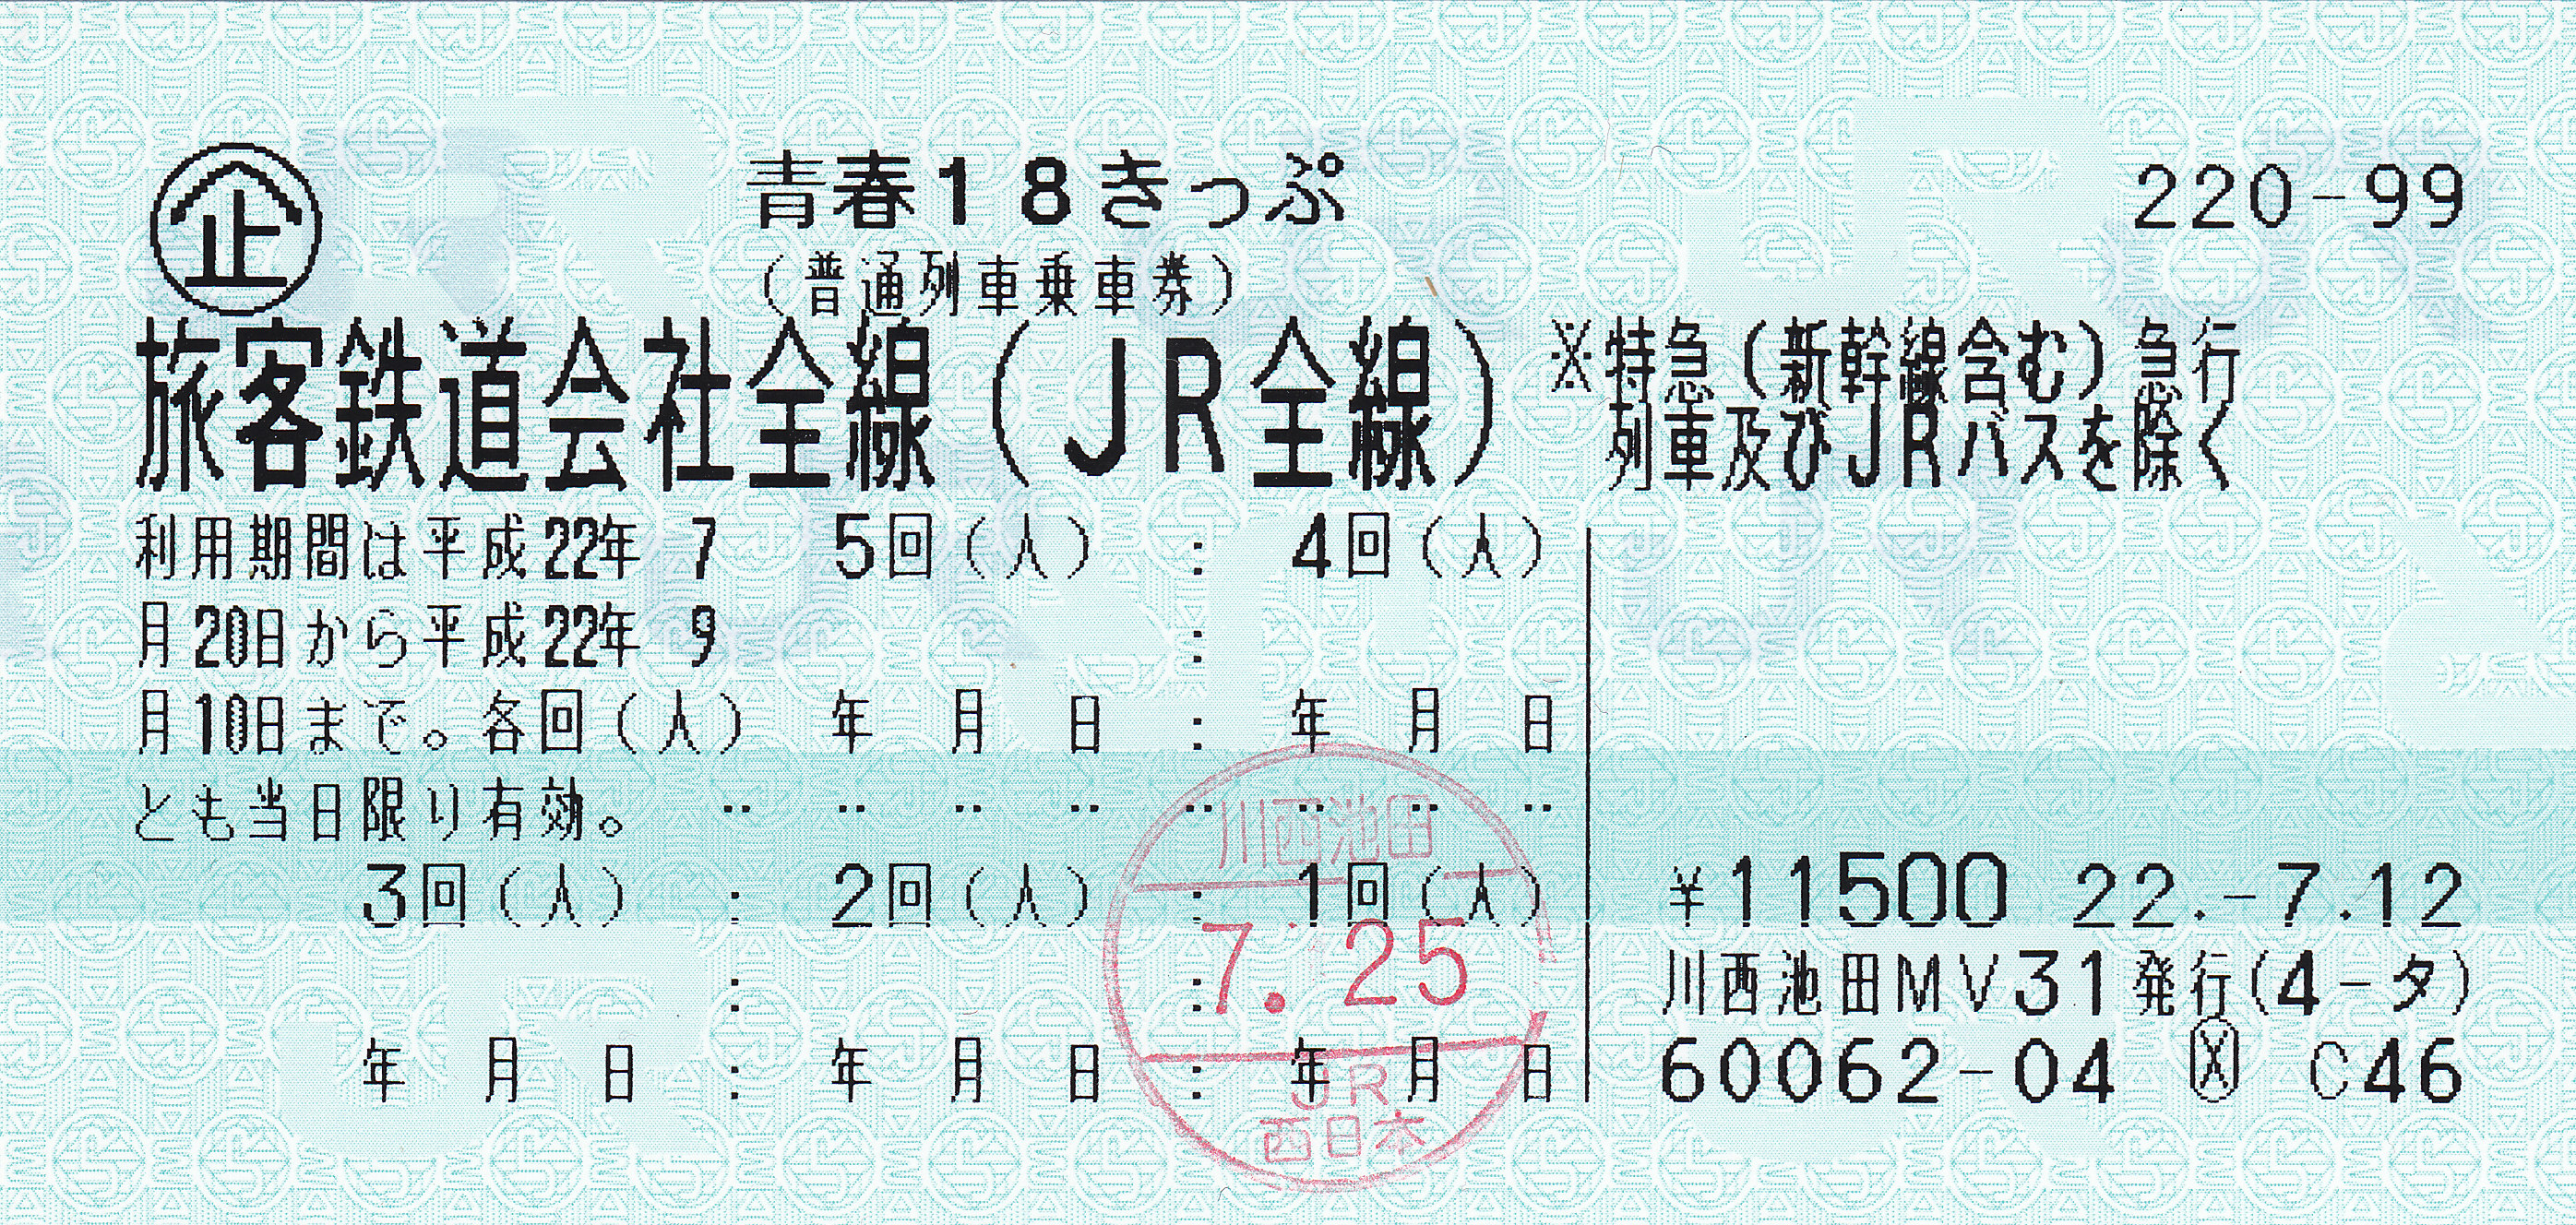 Datei 青春18きっぷ 普通列車乗車券 Jpg Wikipedia